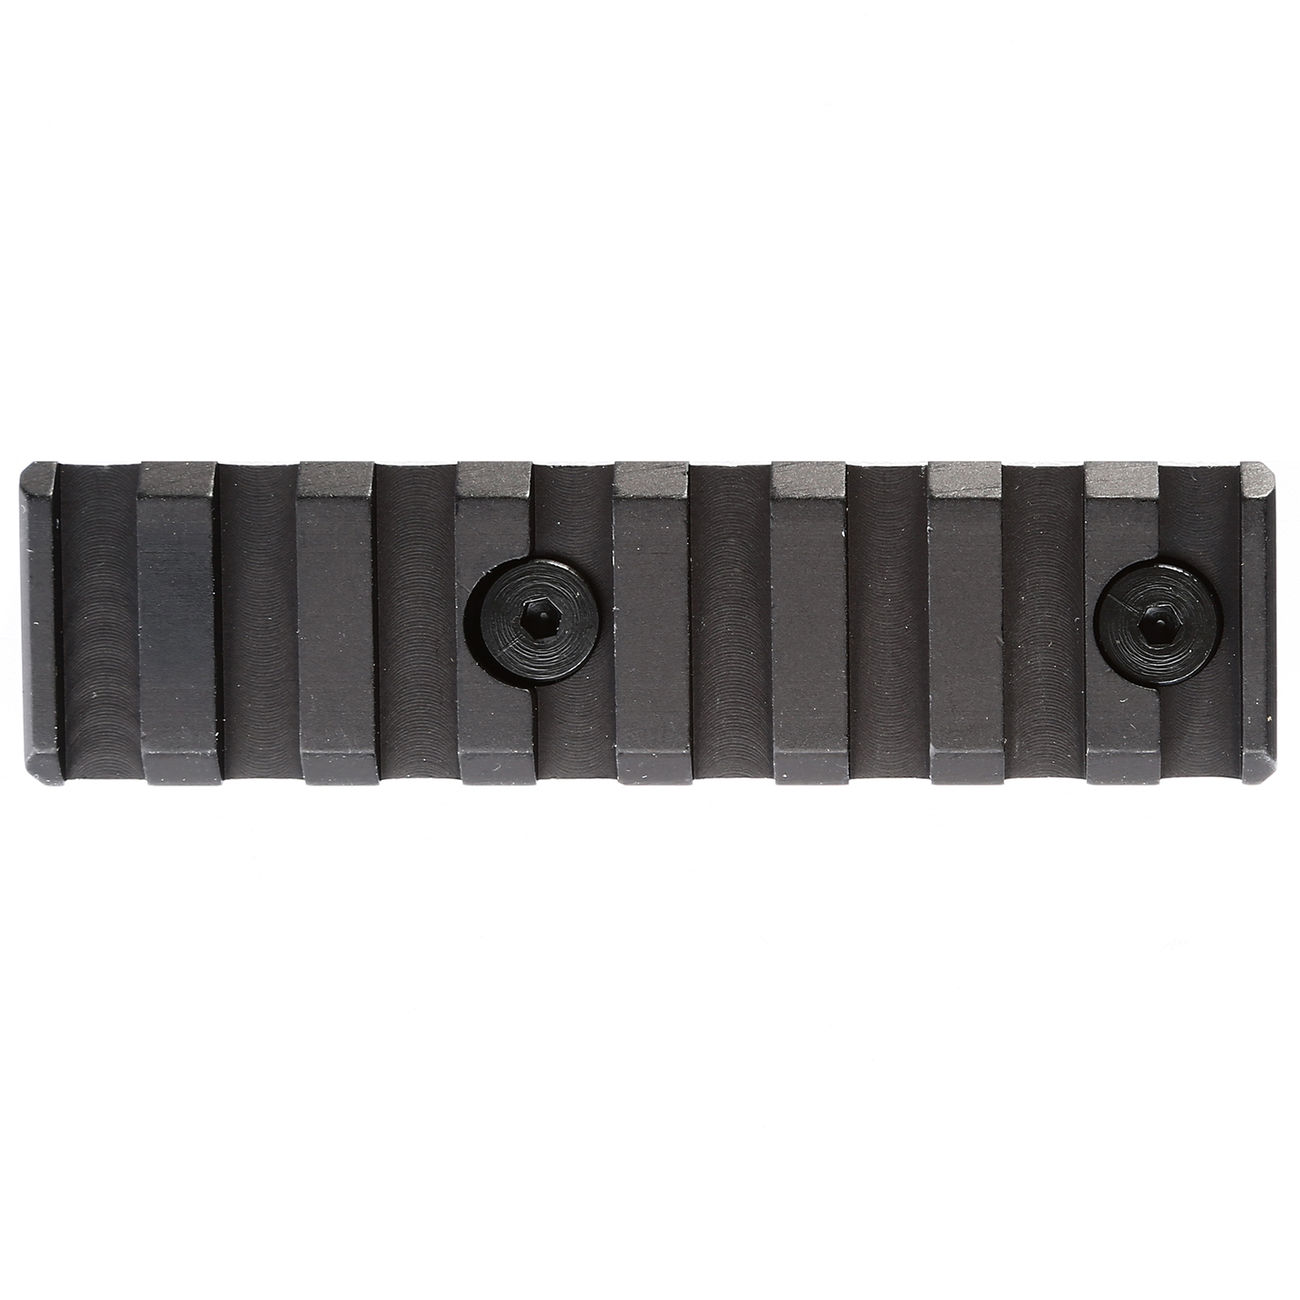 UTG Pro KeyMod 21mm Aluminium Schiene 8 Slots / 80 mm / 3.14 Zoll schwarz Bild 3